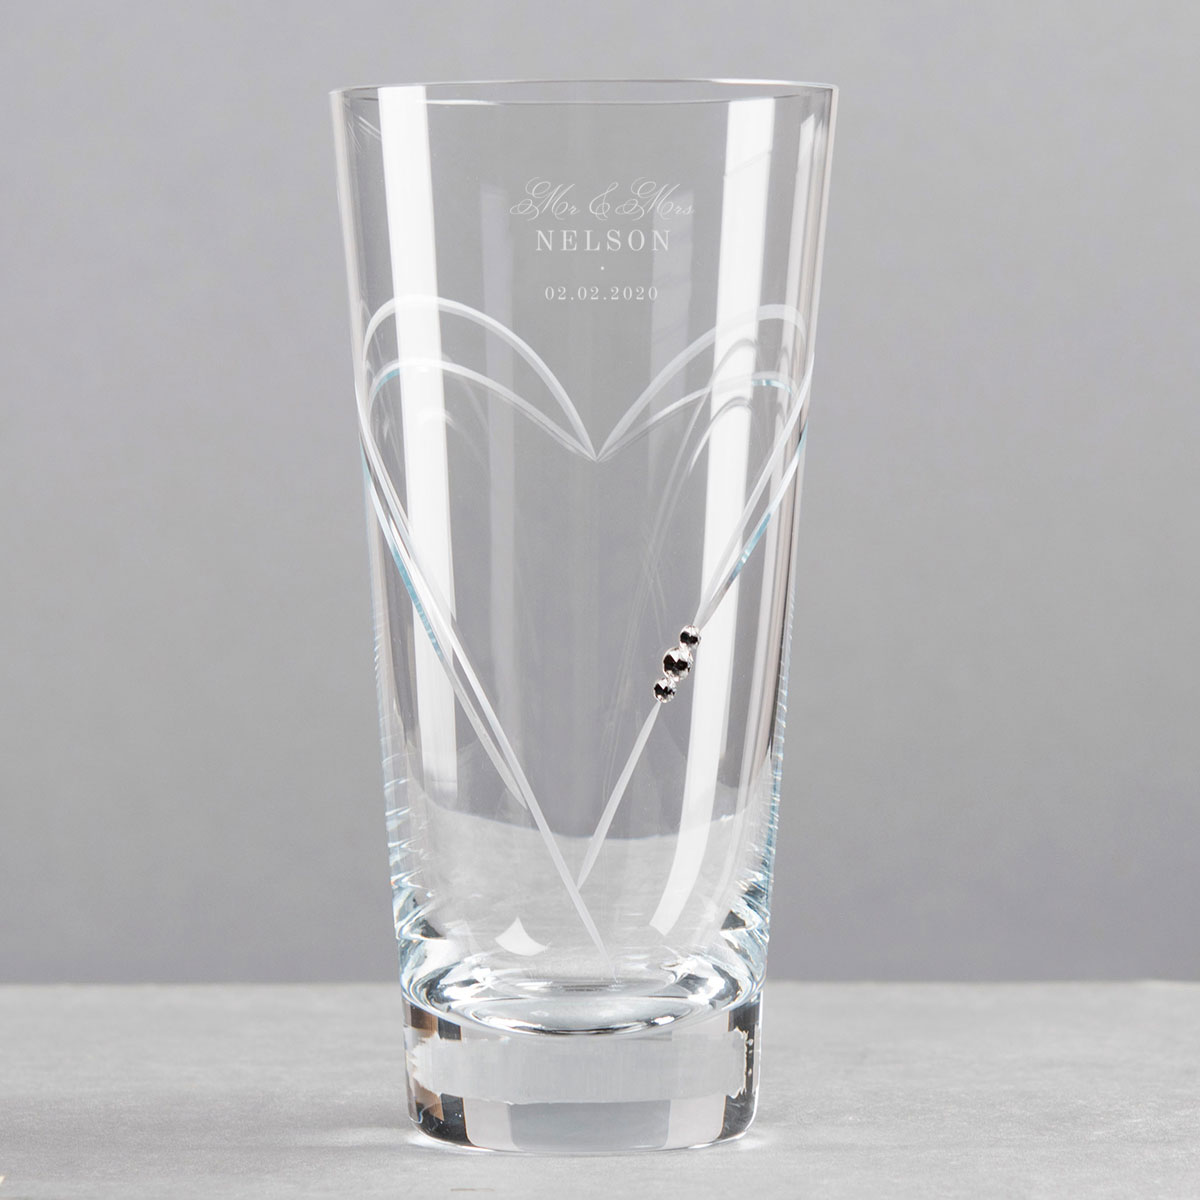 Engraved Swarovski Elements Glass Vase - Vintage Blossom Couple